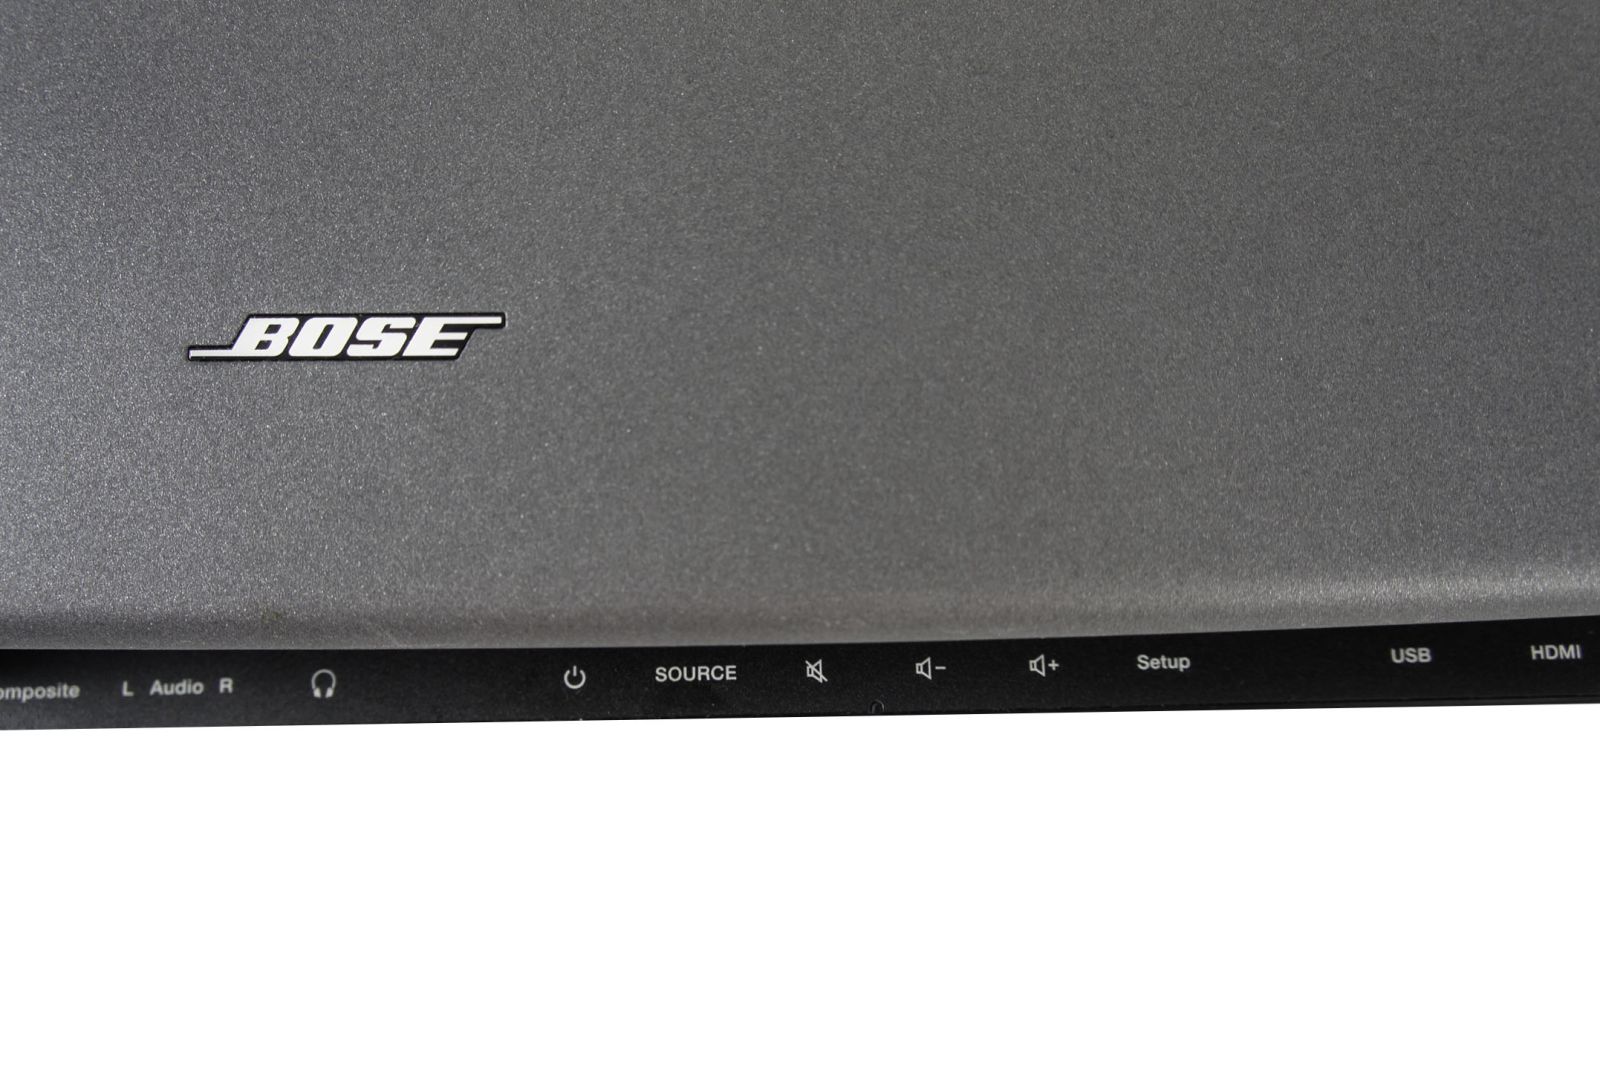 Bose_Lifestyle_AV-35_HDMI_5.1_Control_Console_04